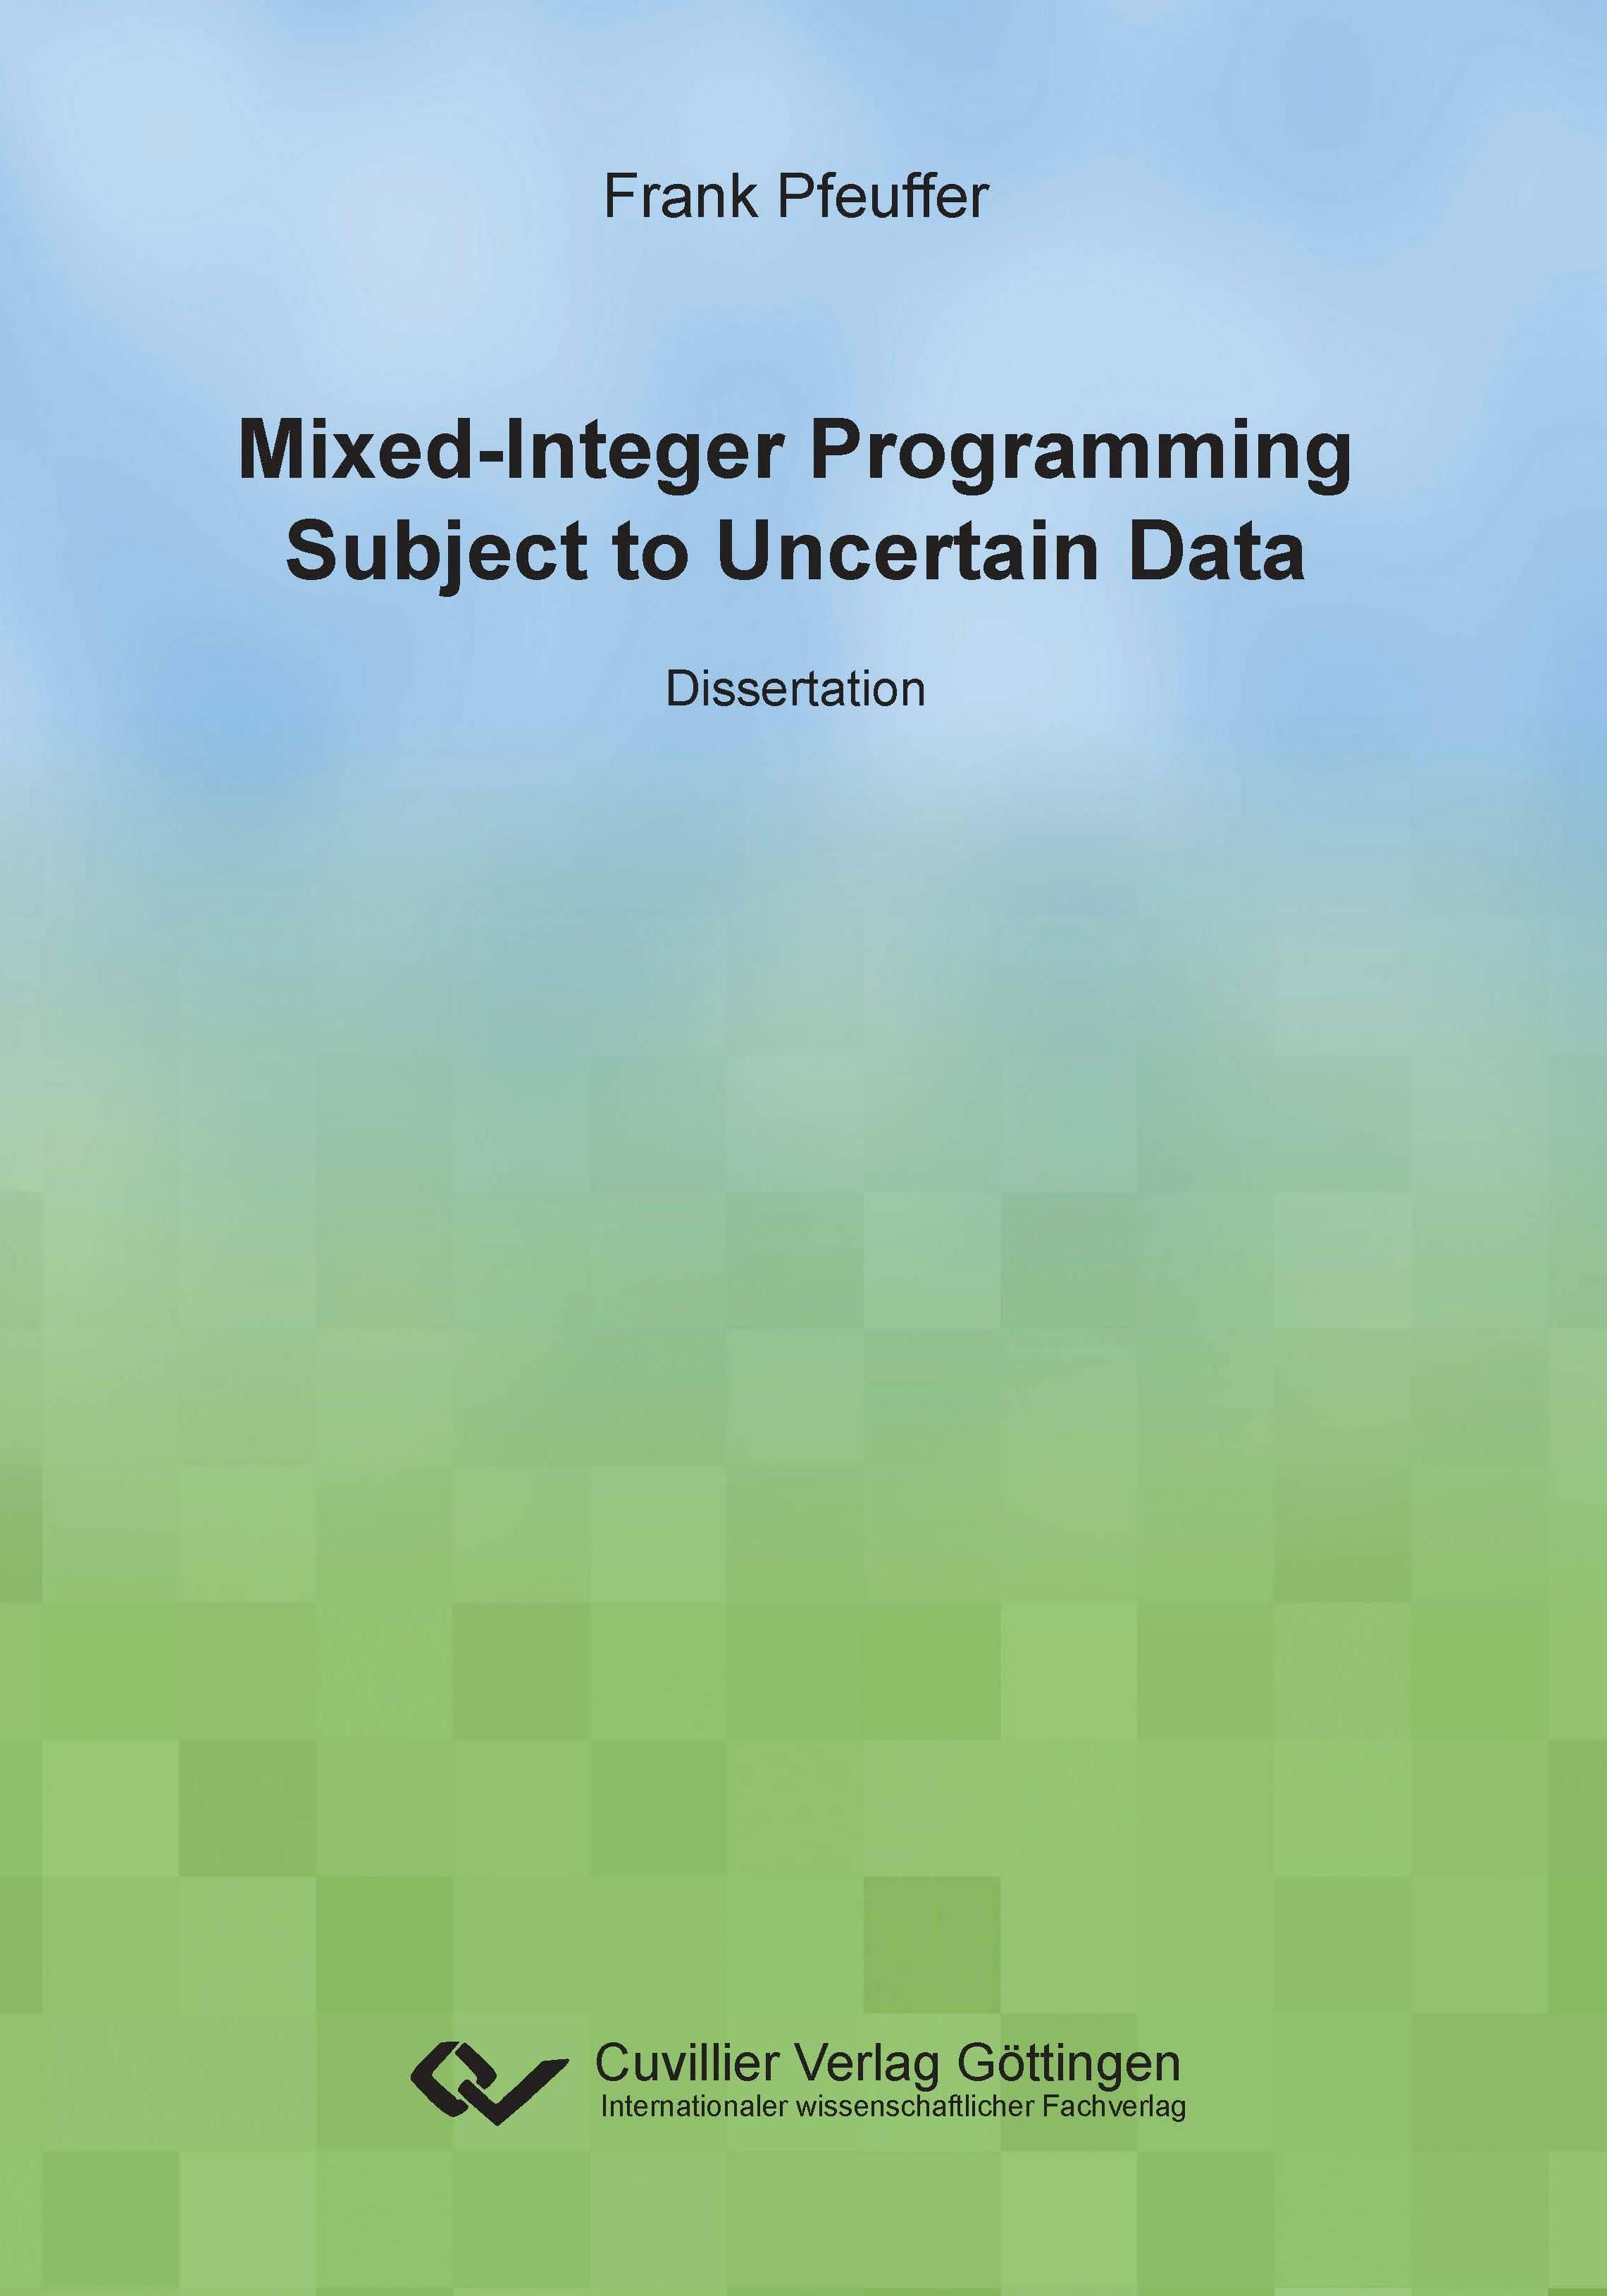 Mixed-Integer Programming Subject to Uncertain Data - Pfeuffer, Frank